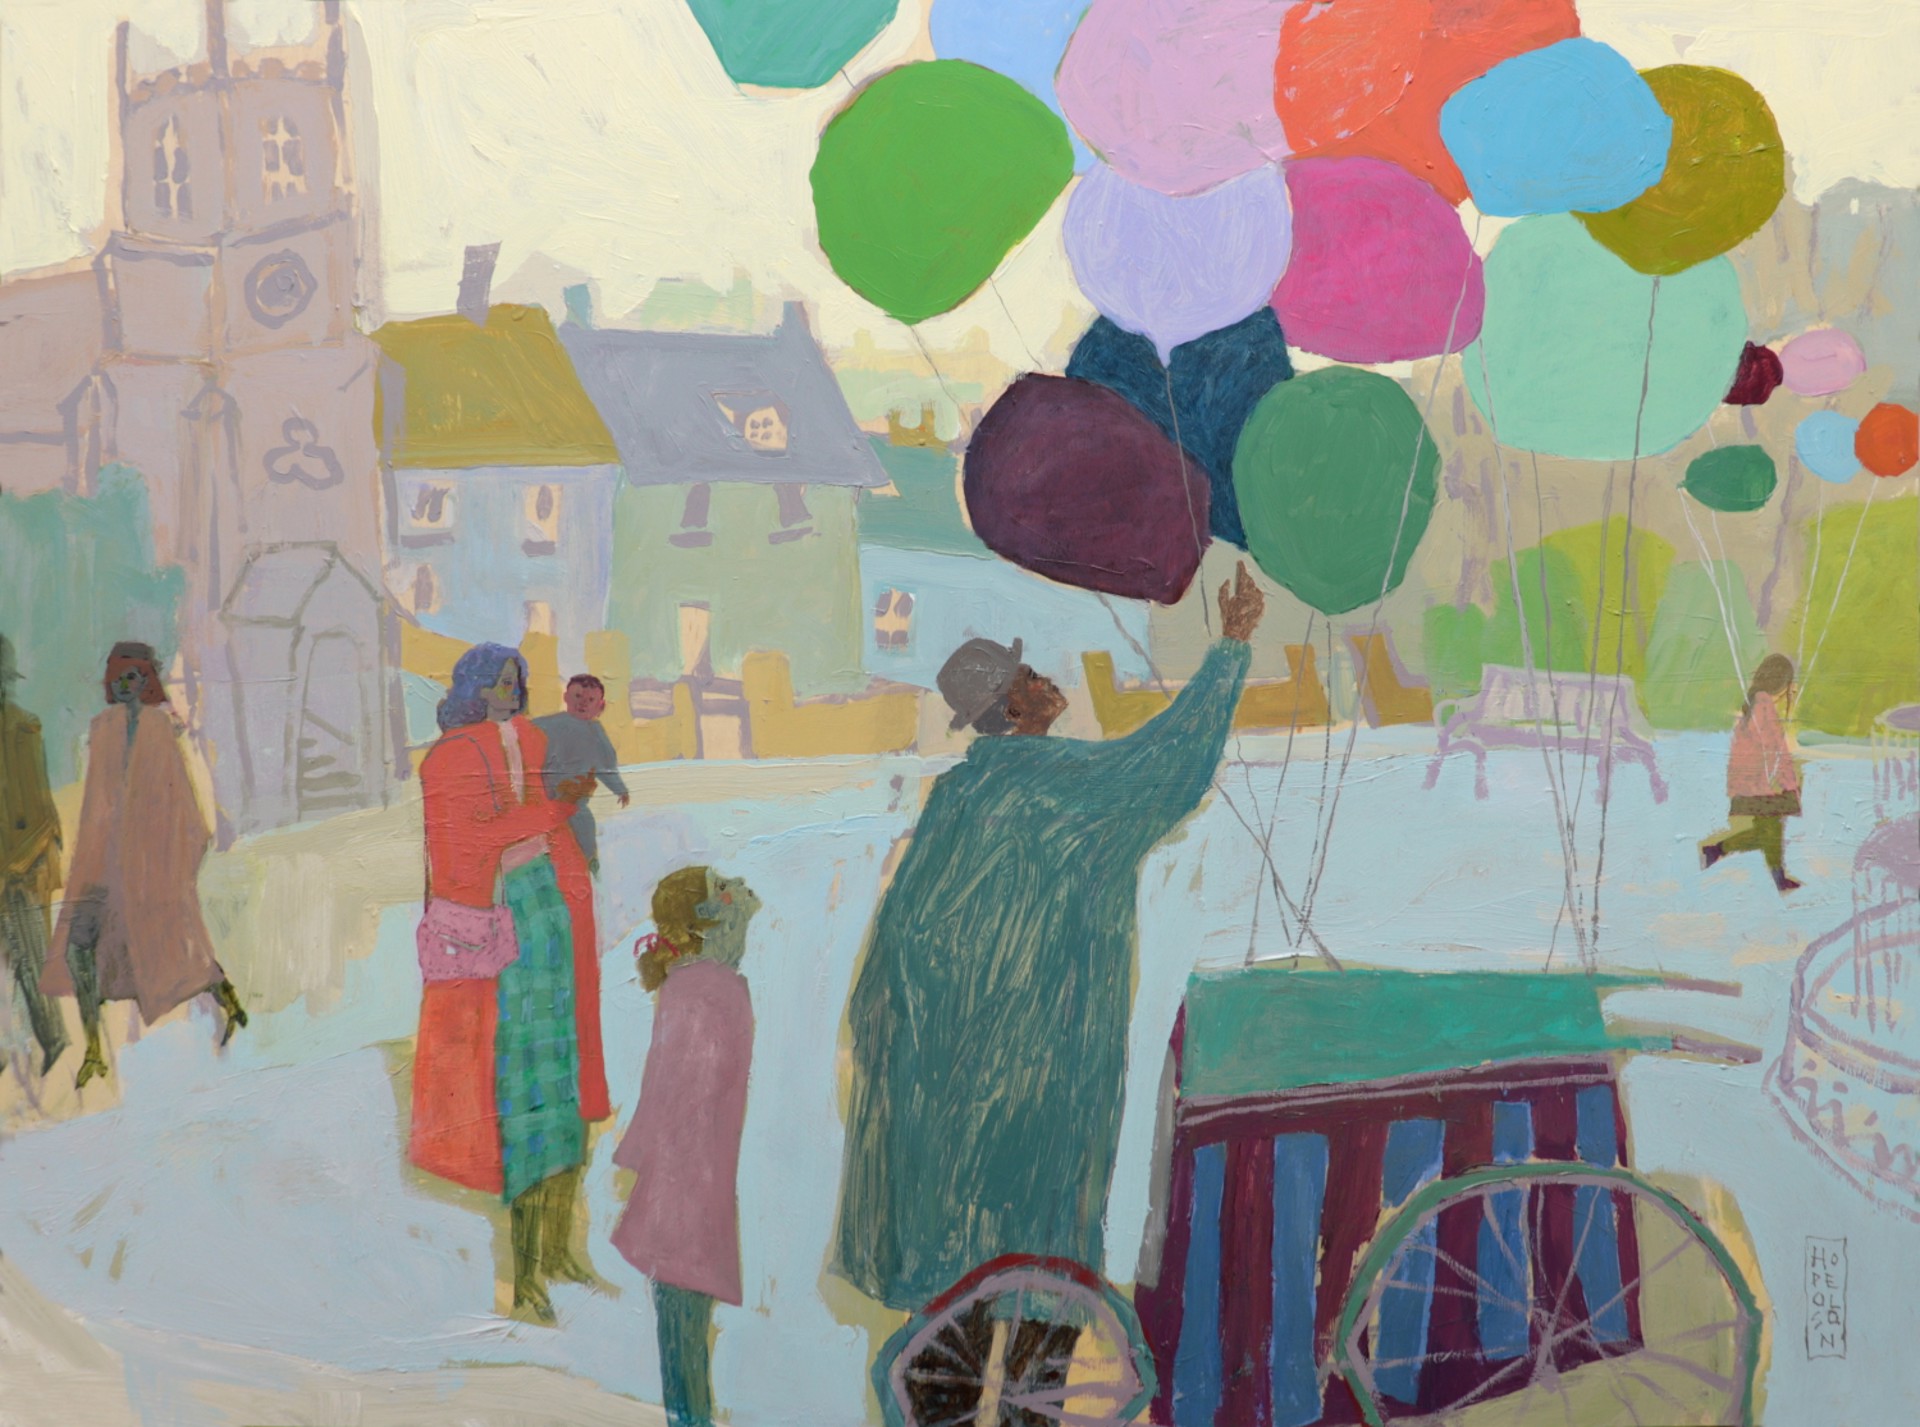 Balloon Salesman by Hope Olson